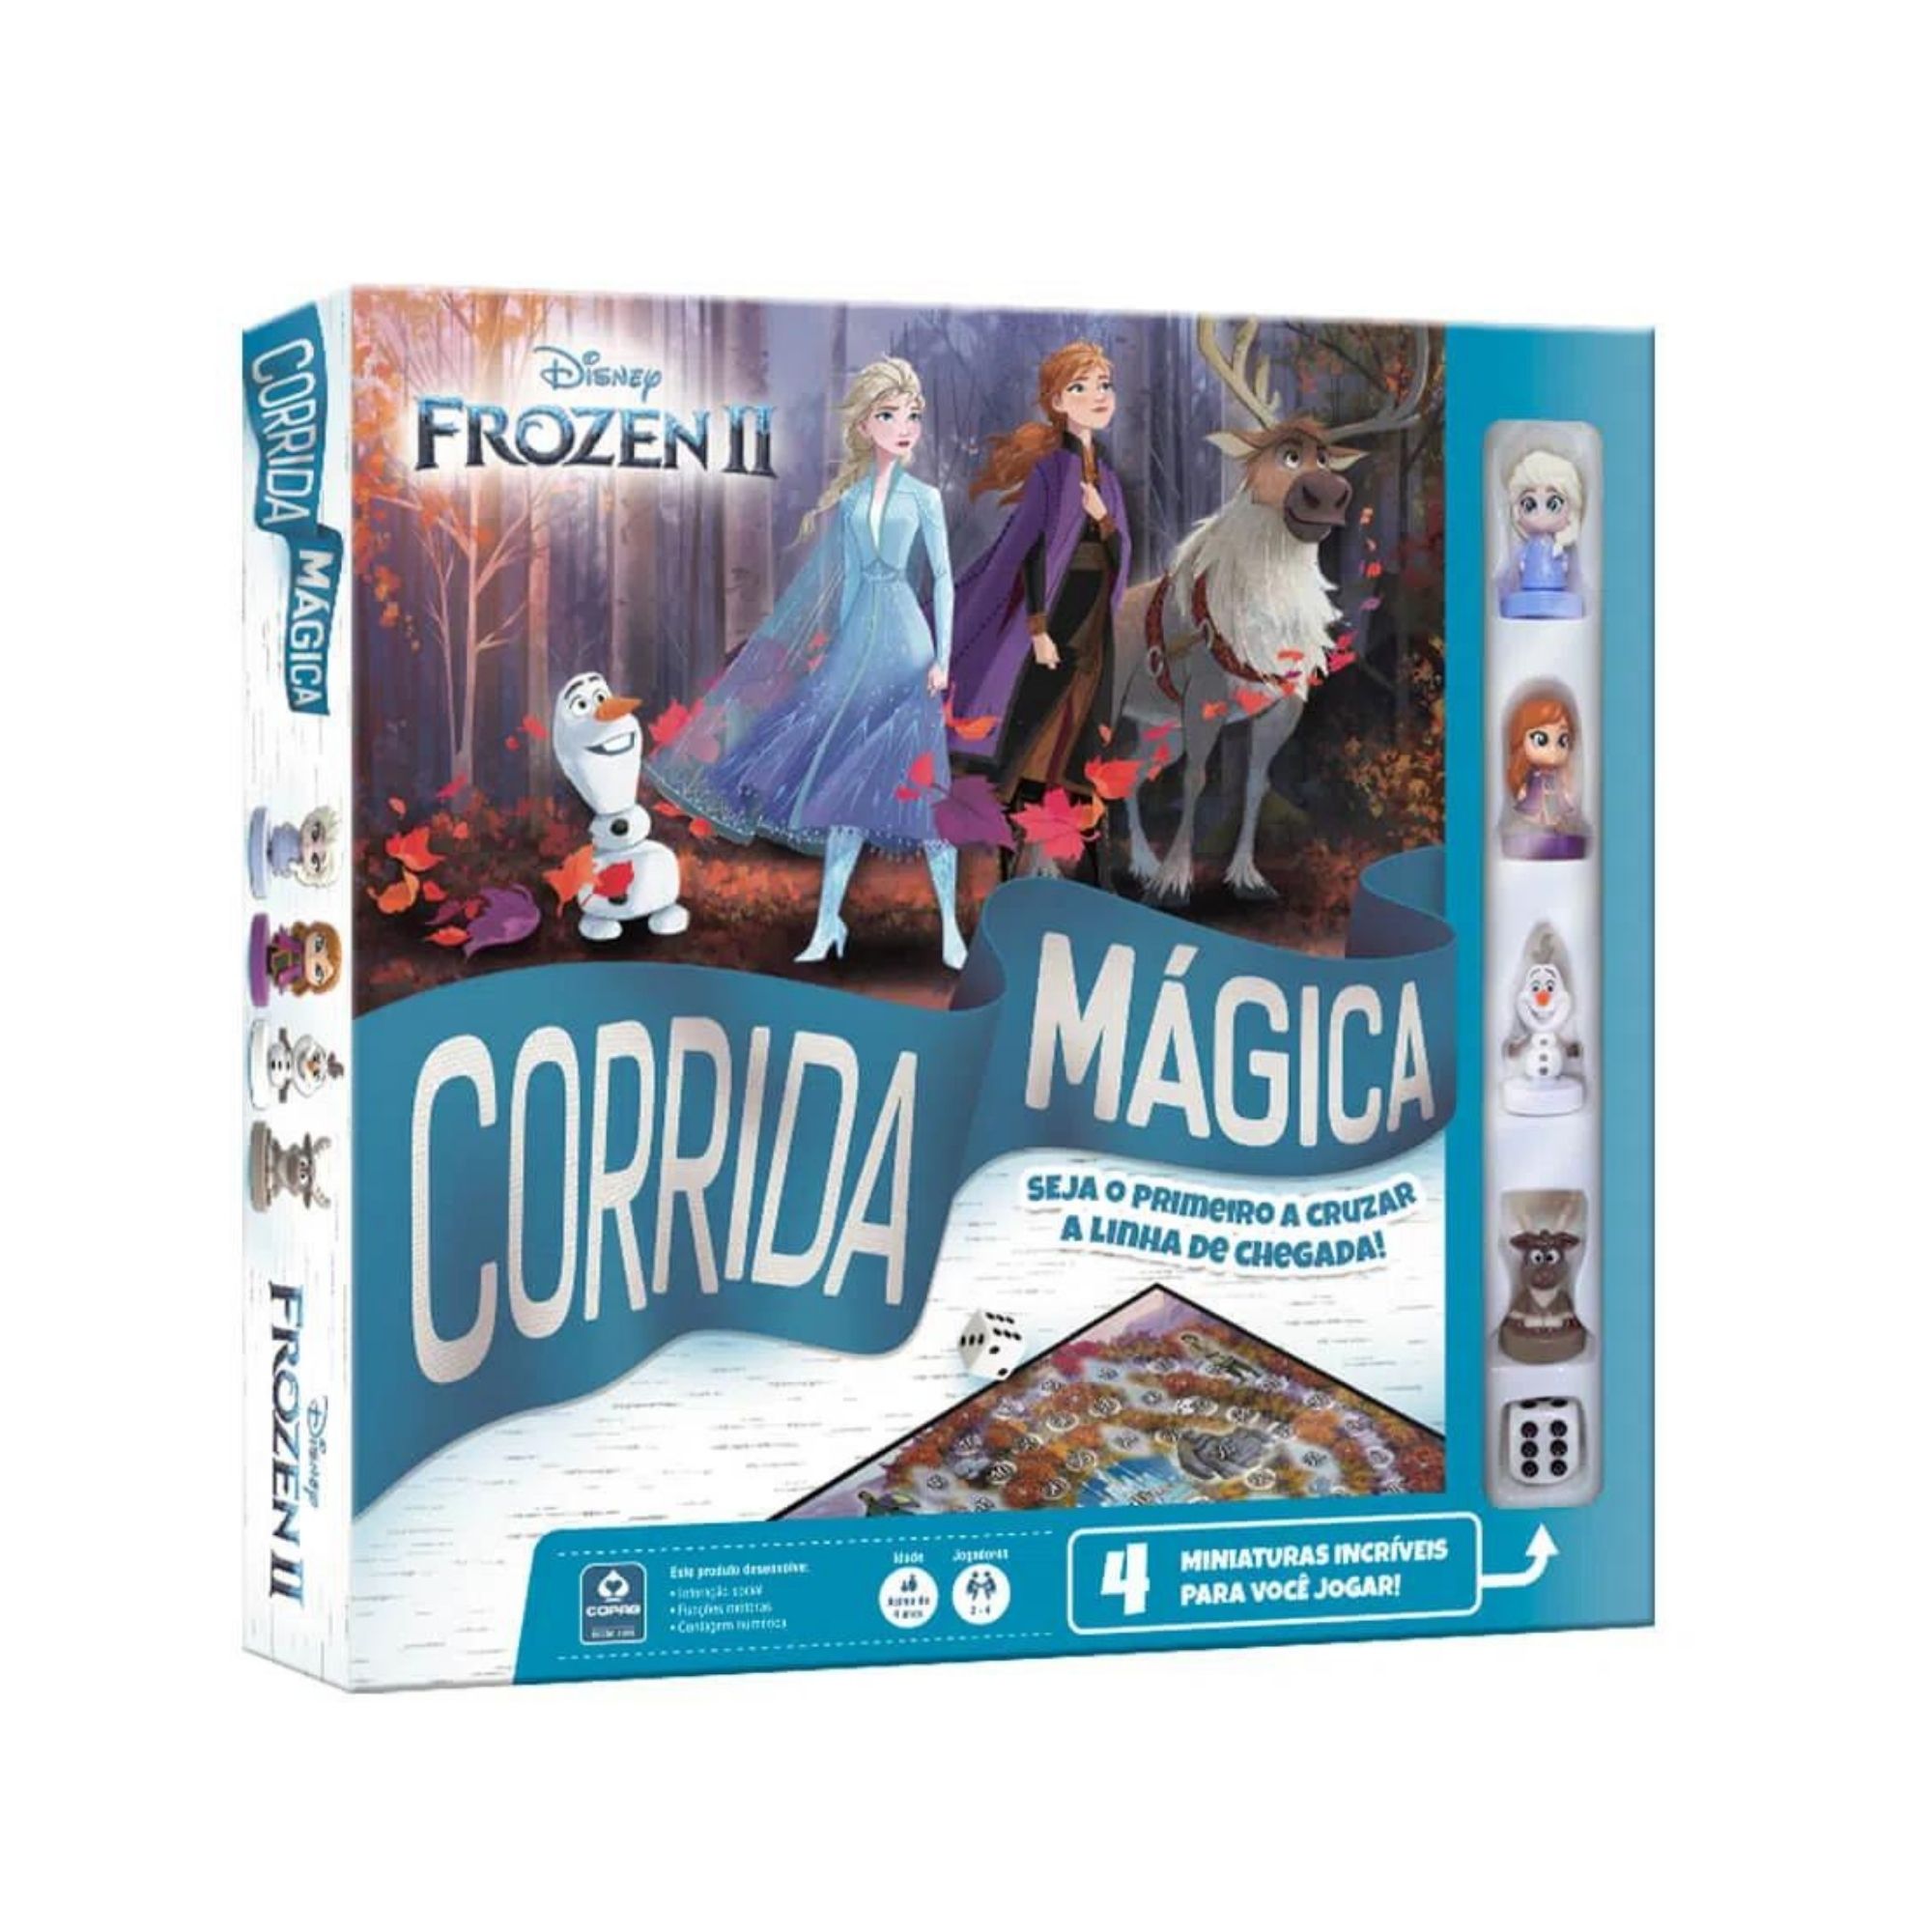 Corrida Mágica Frozen 2